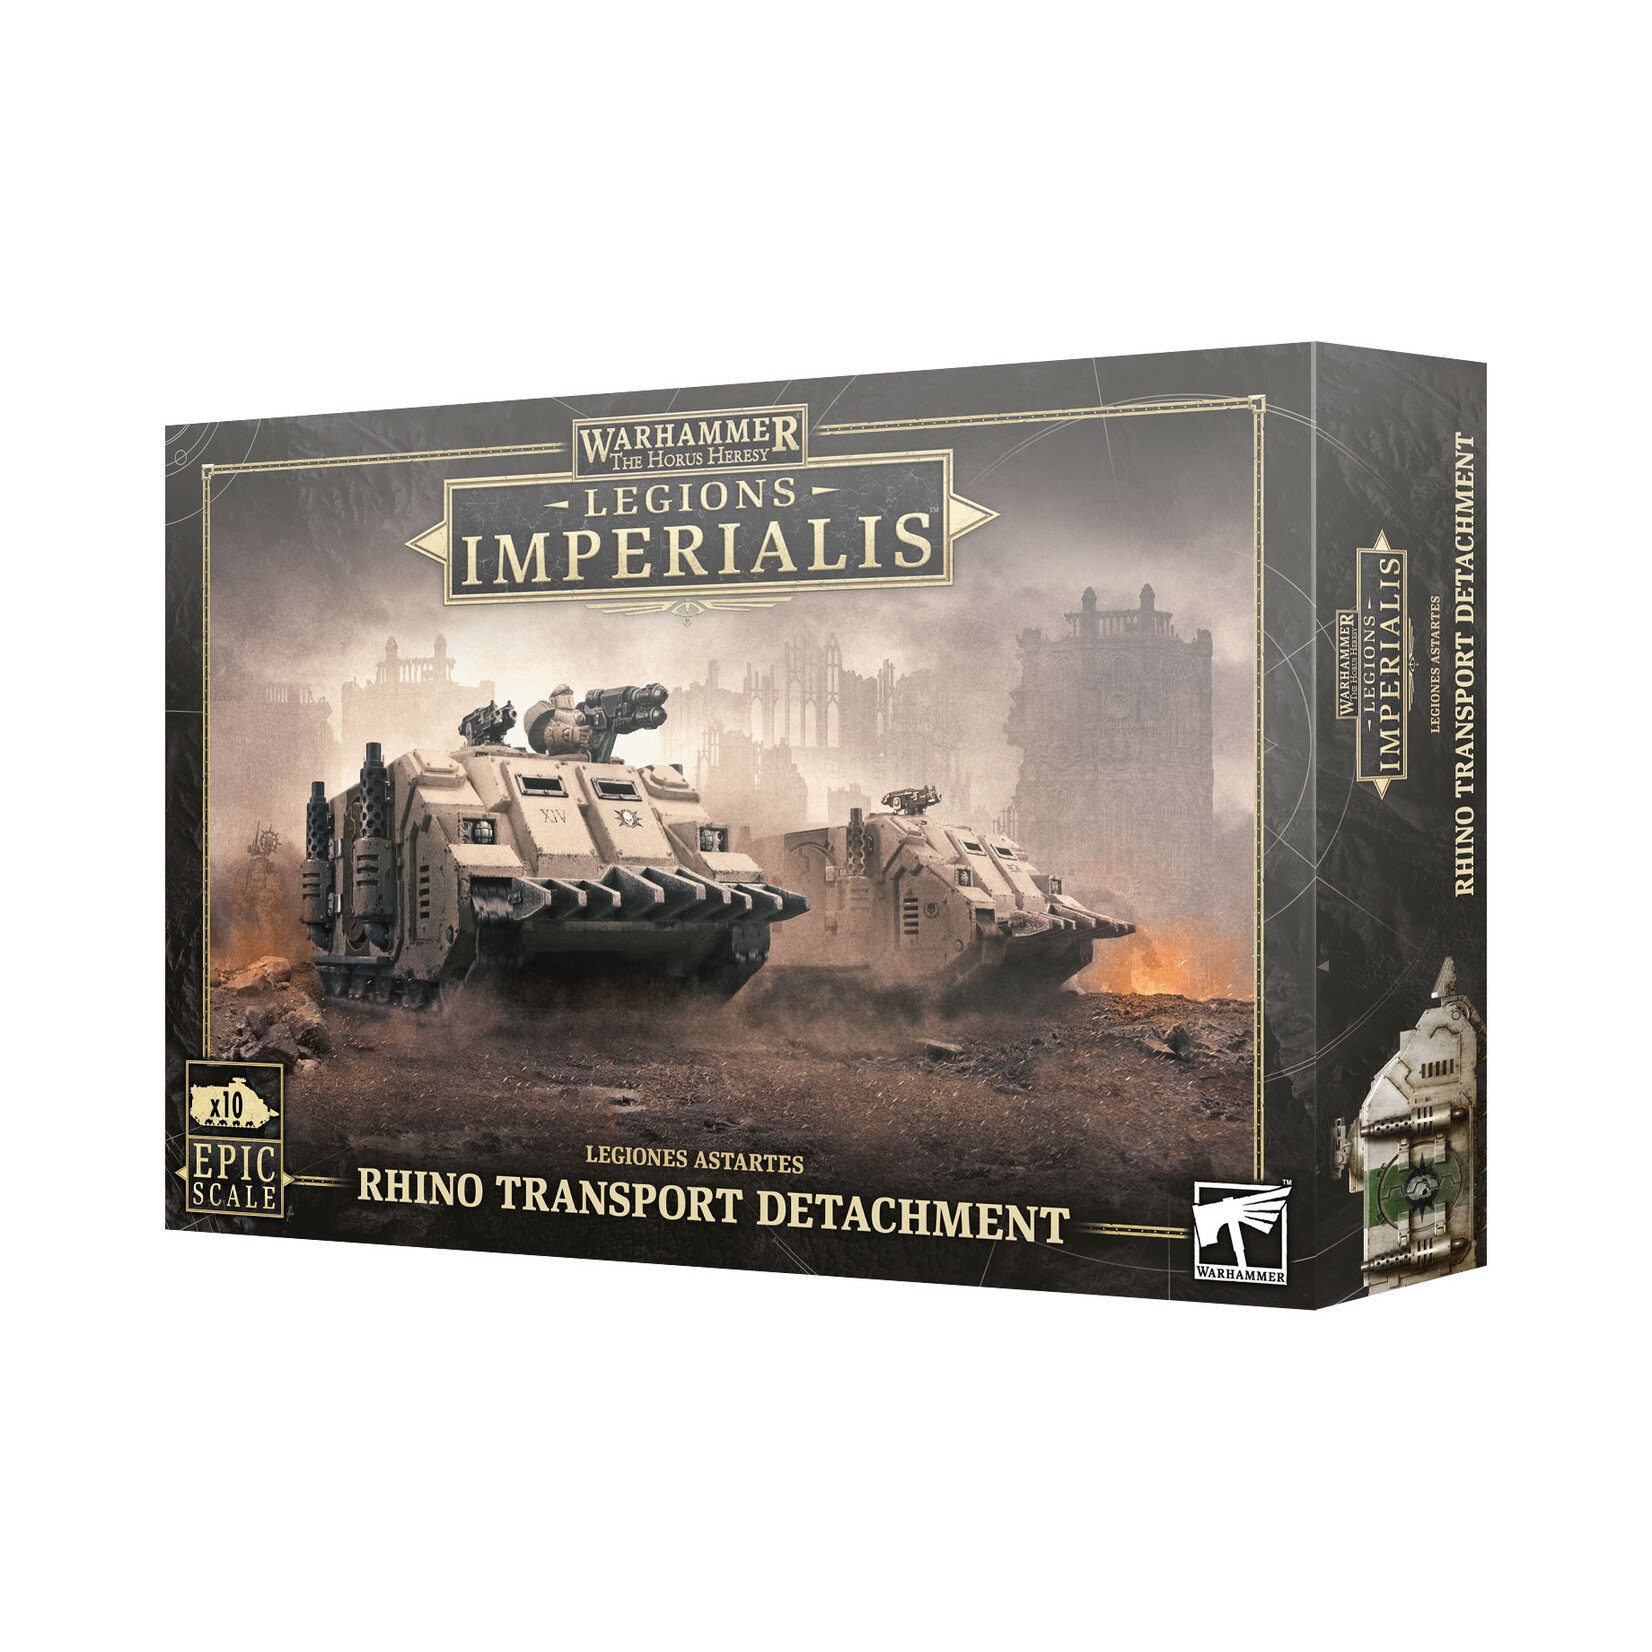 Games Workshop Warhammer Legions Imperialis Rhino Transport Detachment